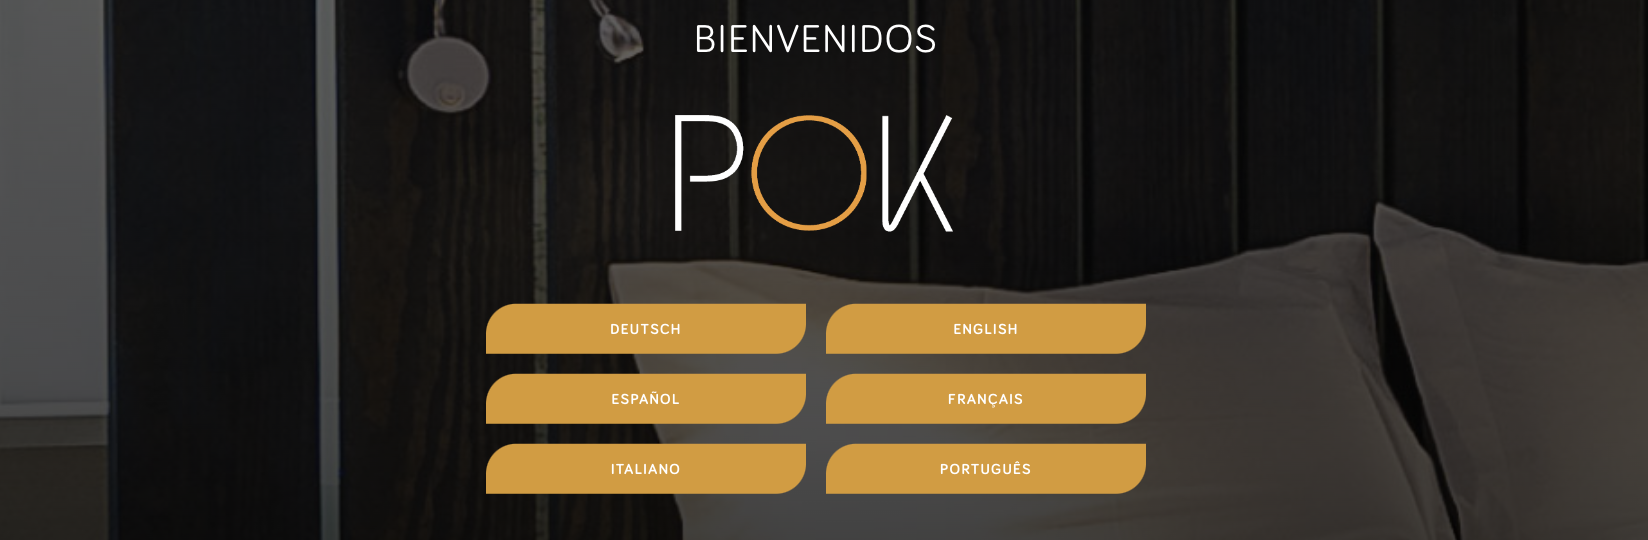 Review POK Point of Kiosk: POK - Check-ins in 30 seconds - Appvizer